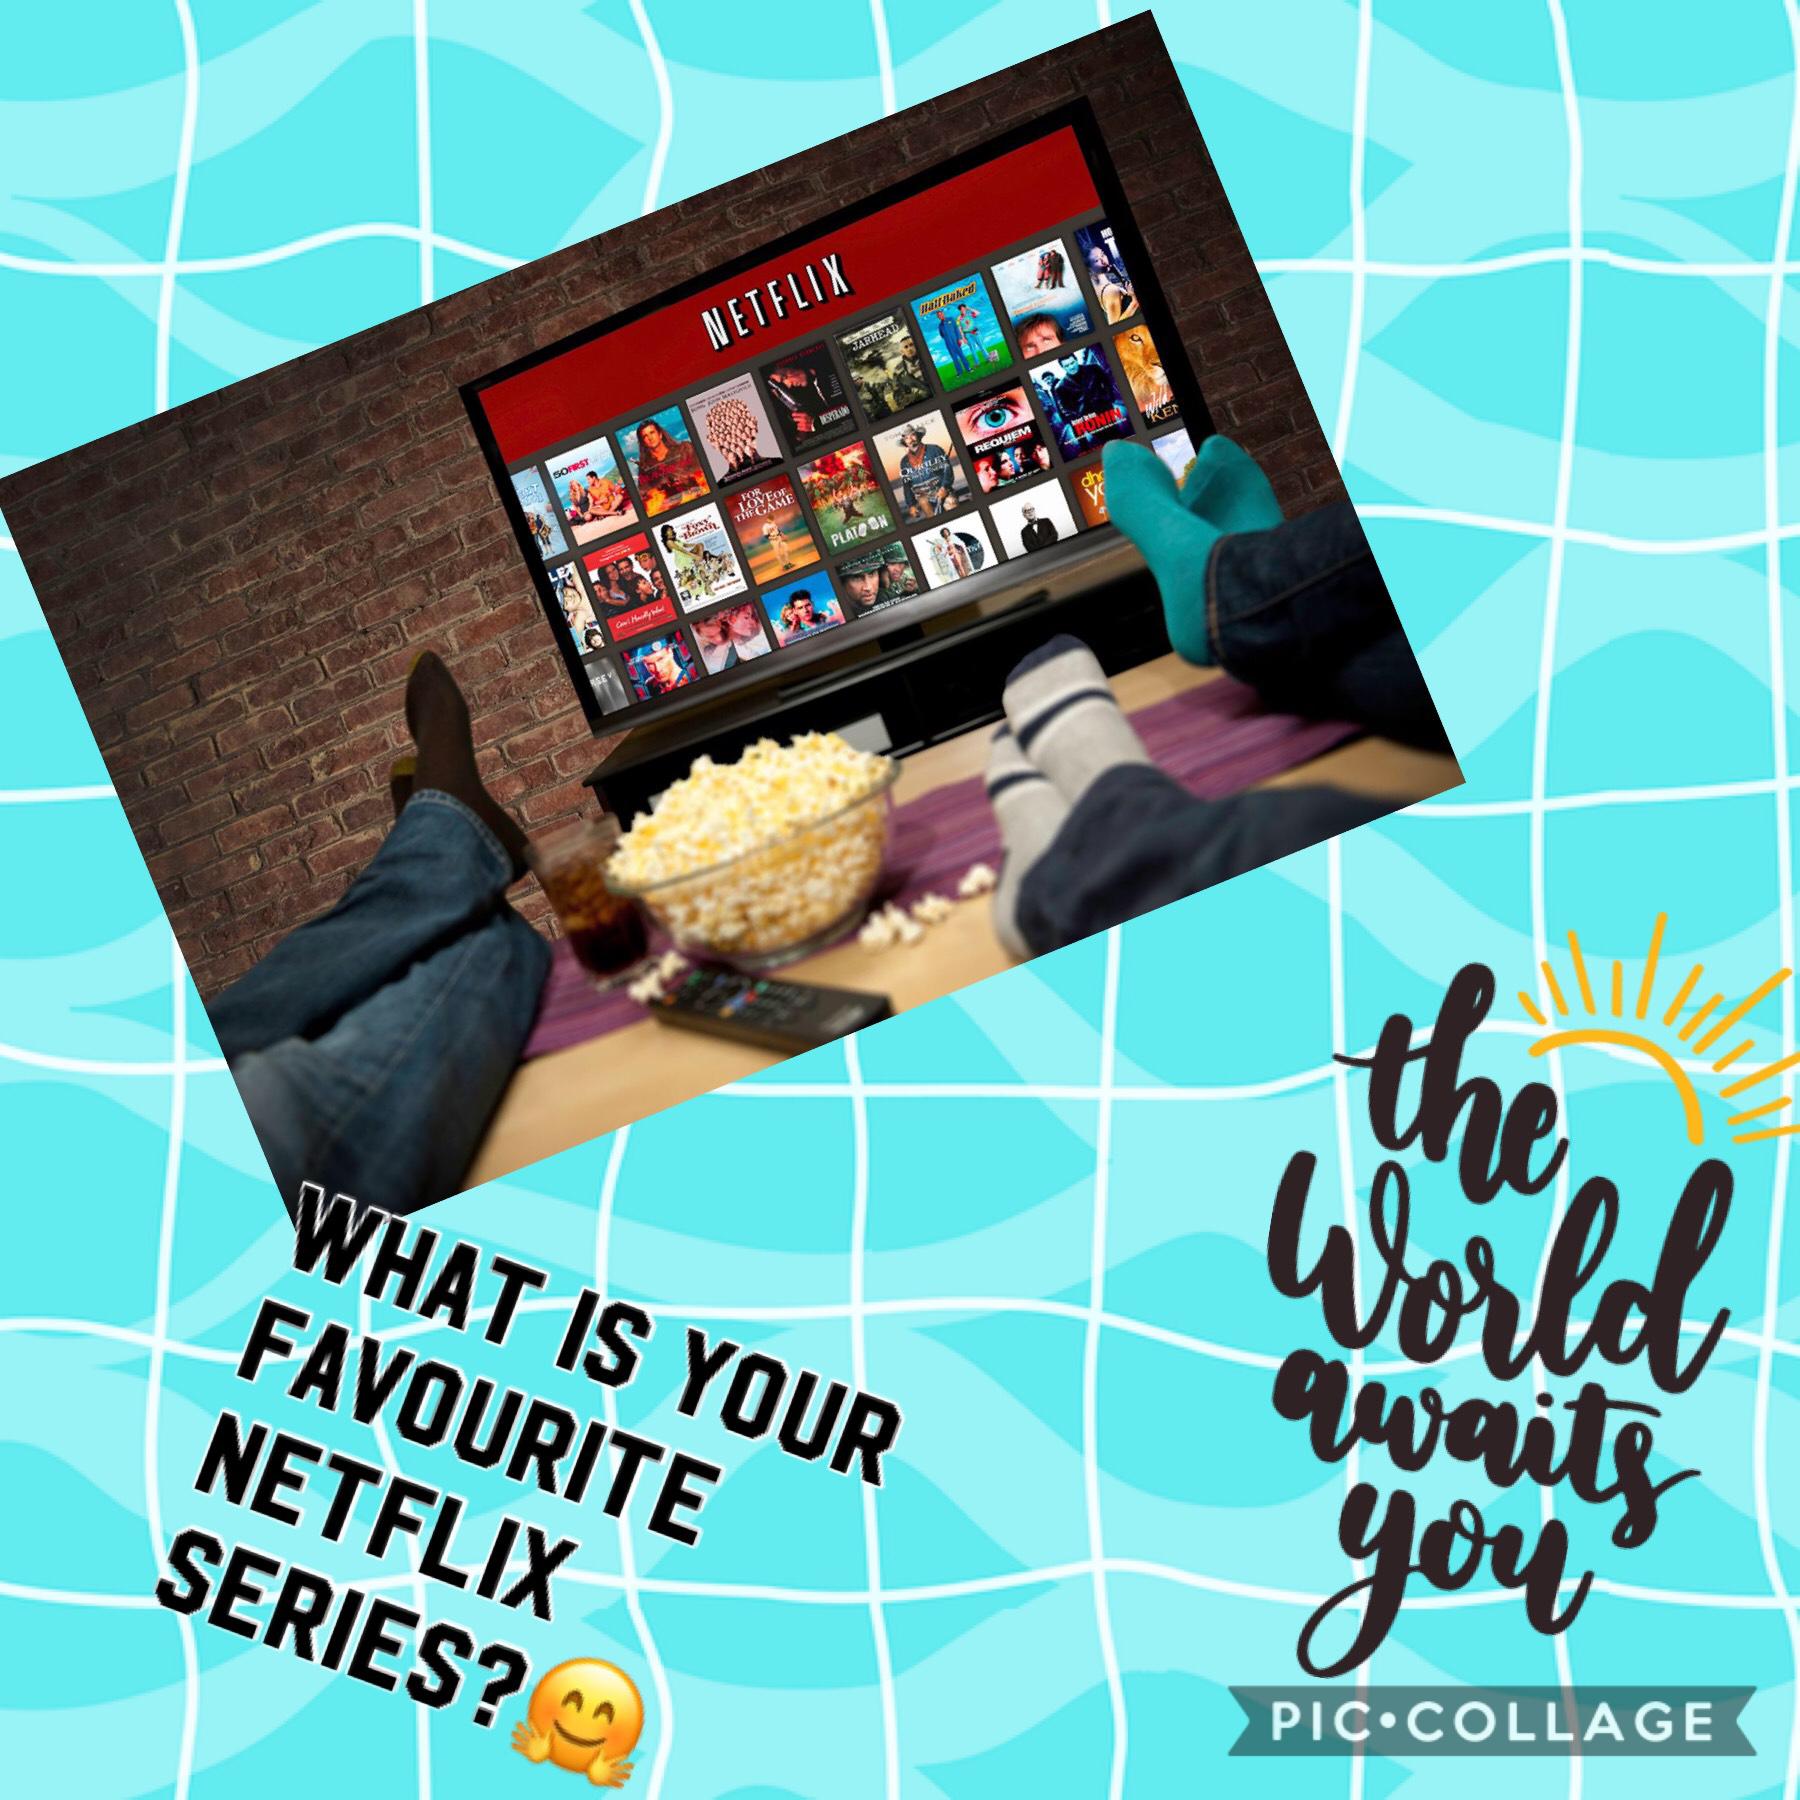 What Netflix series do you like